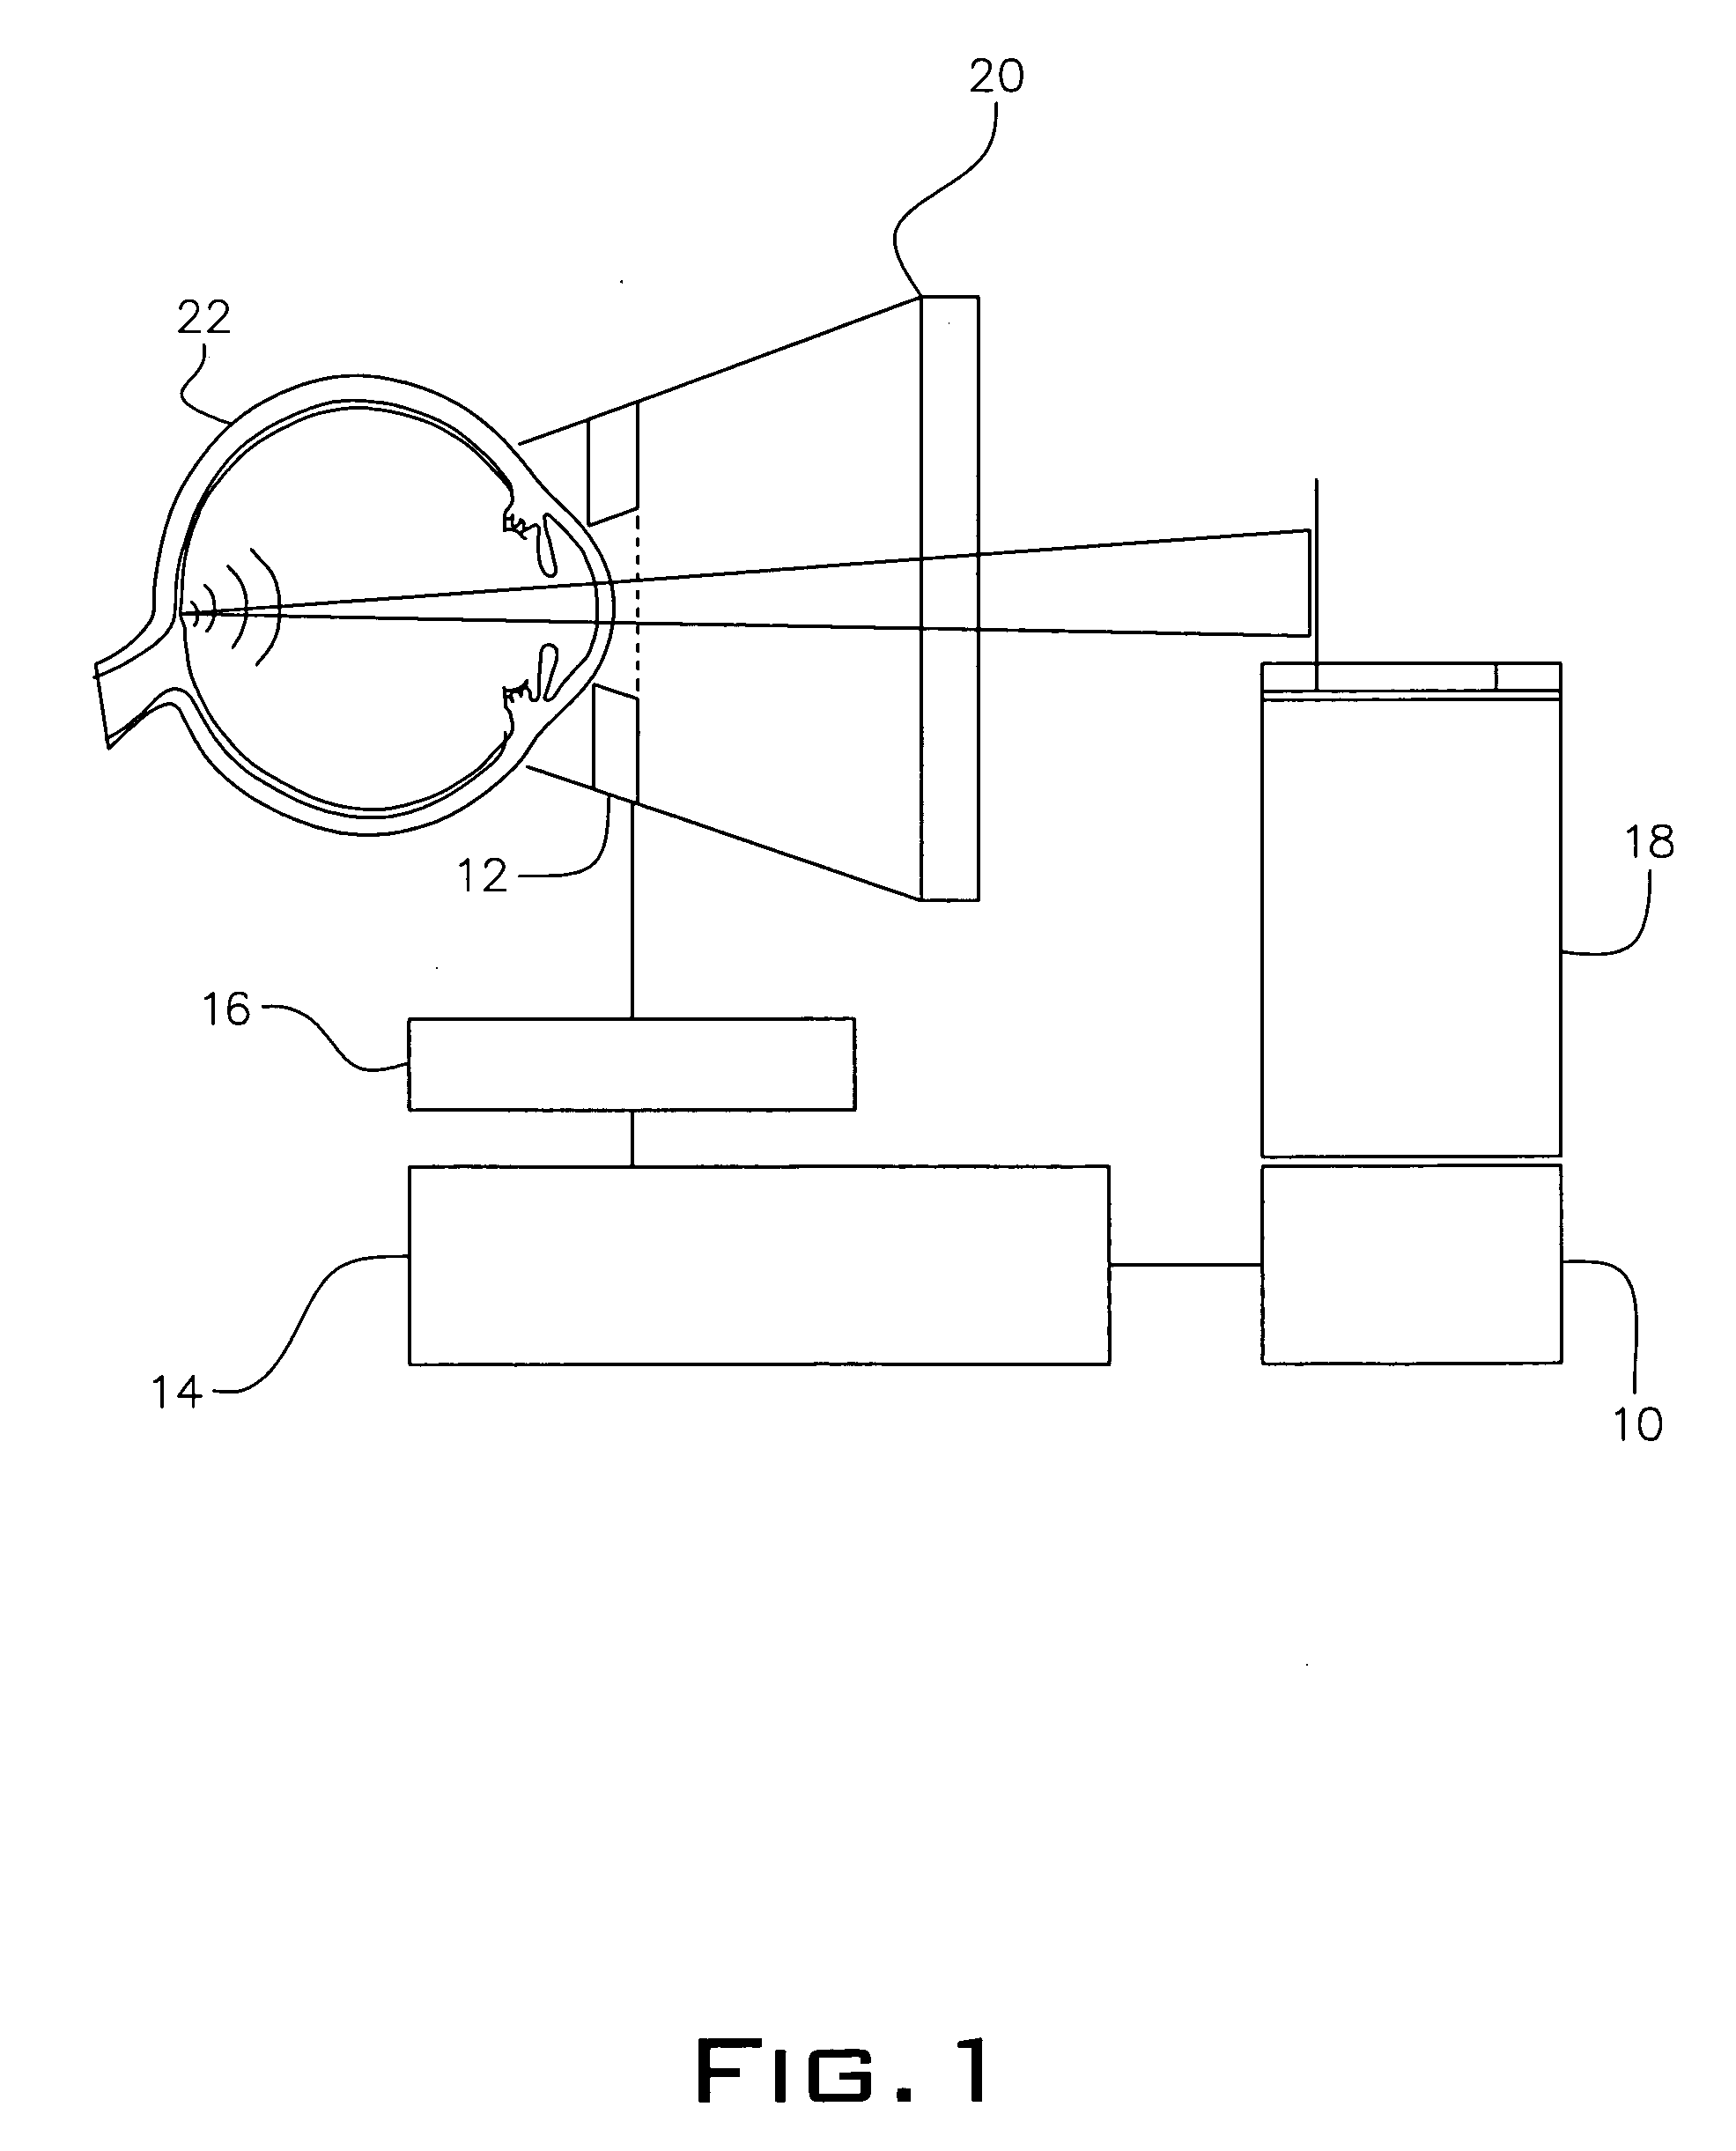 Method for operation of laser